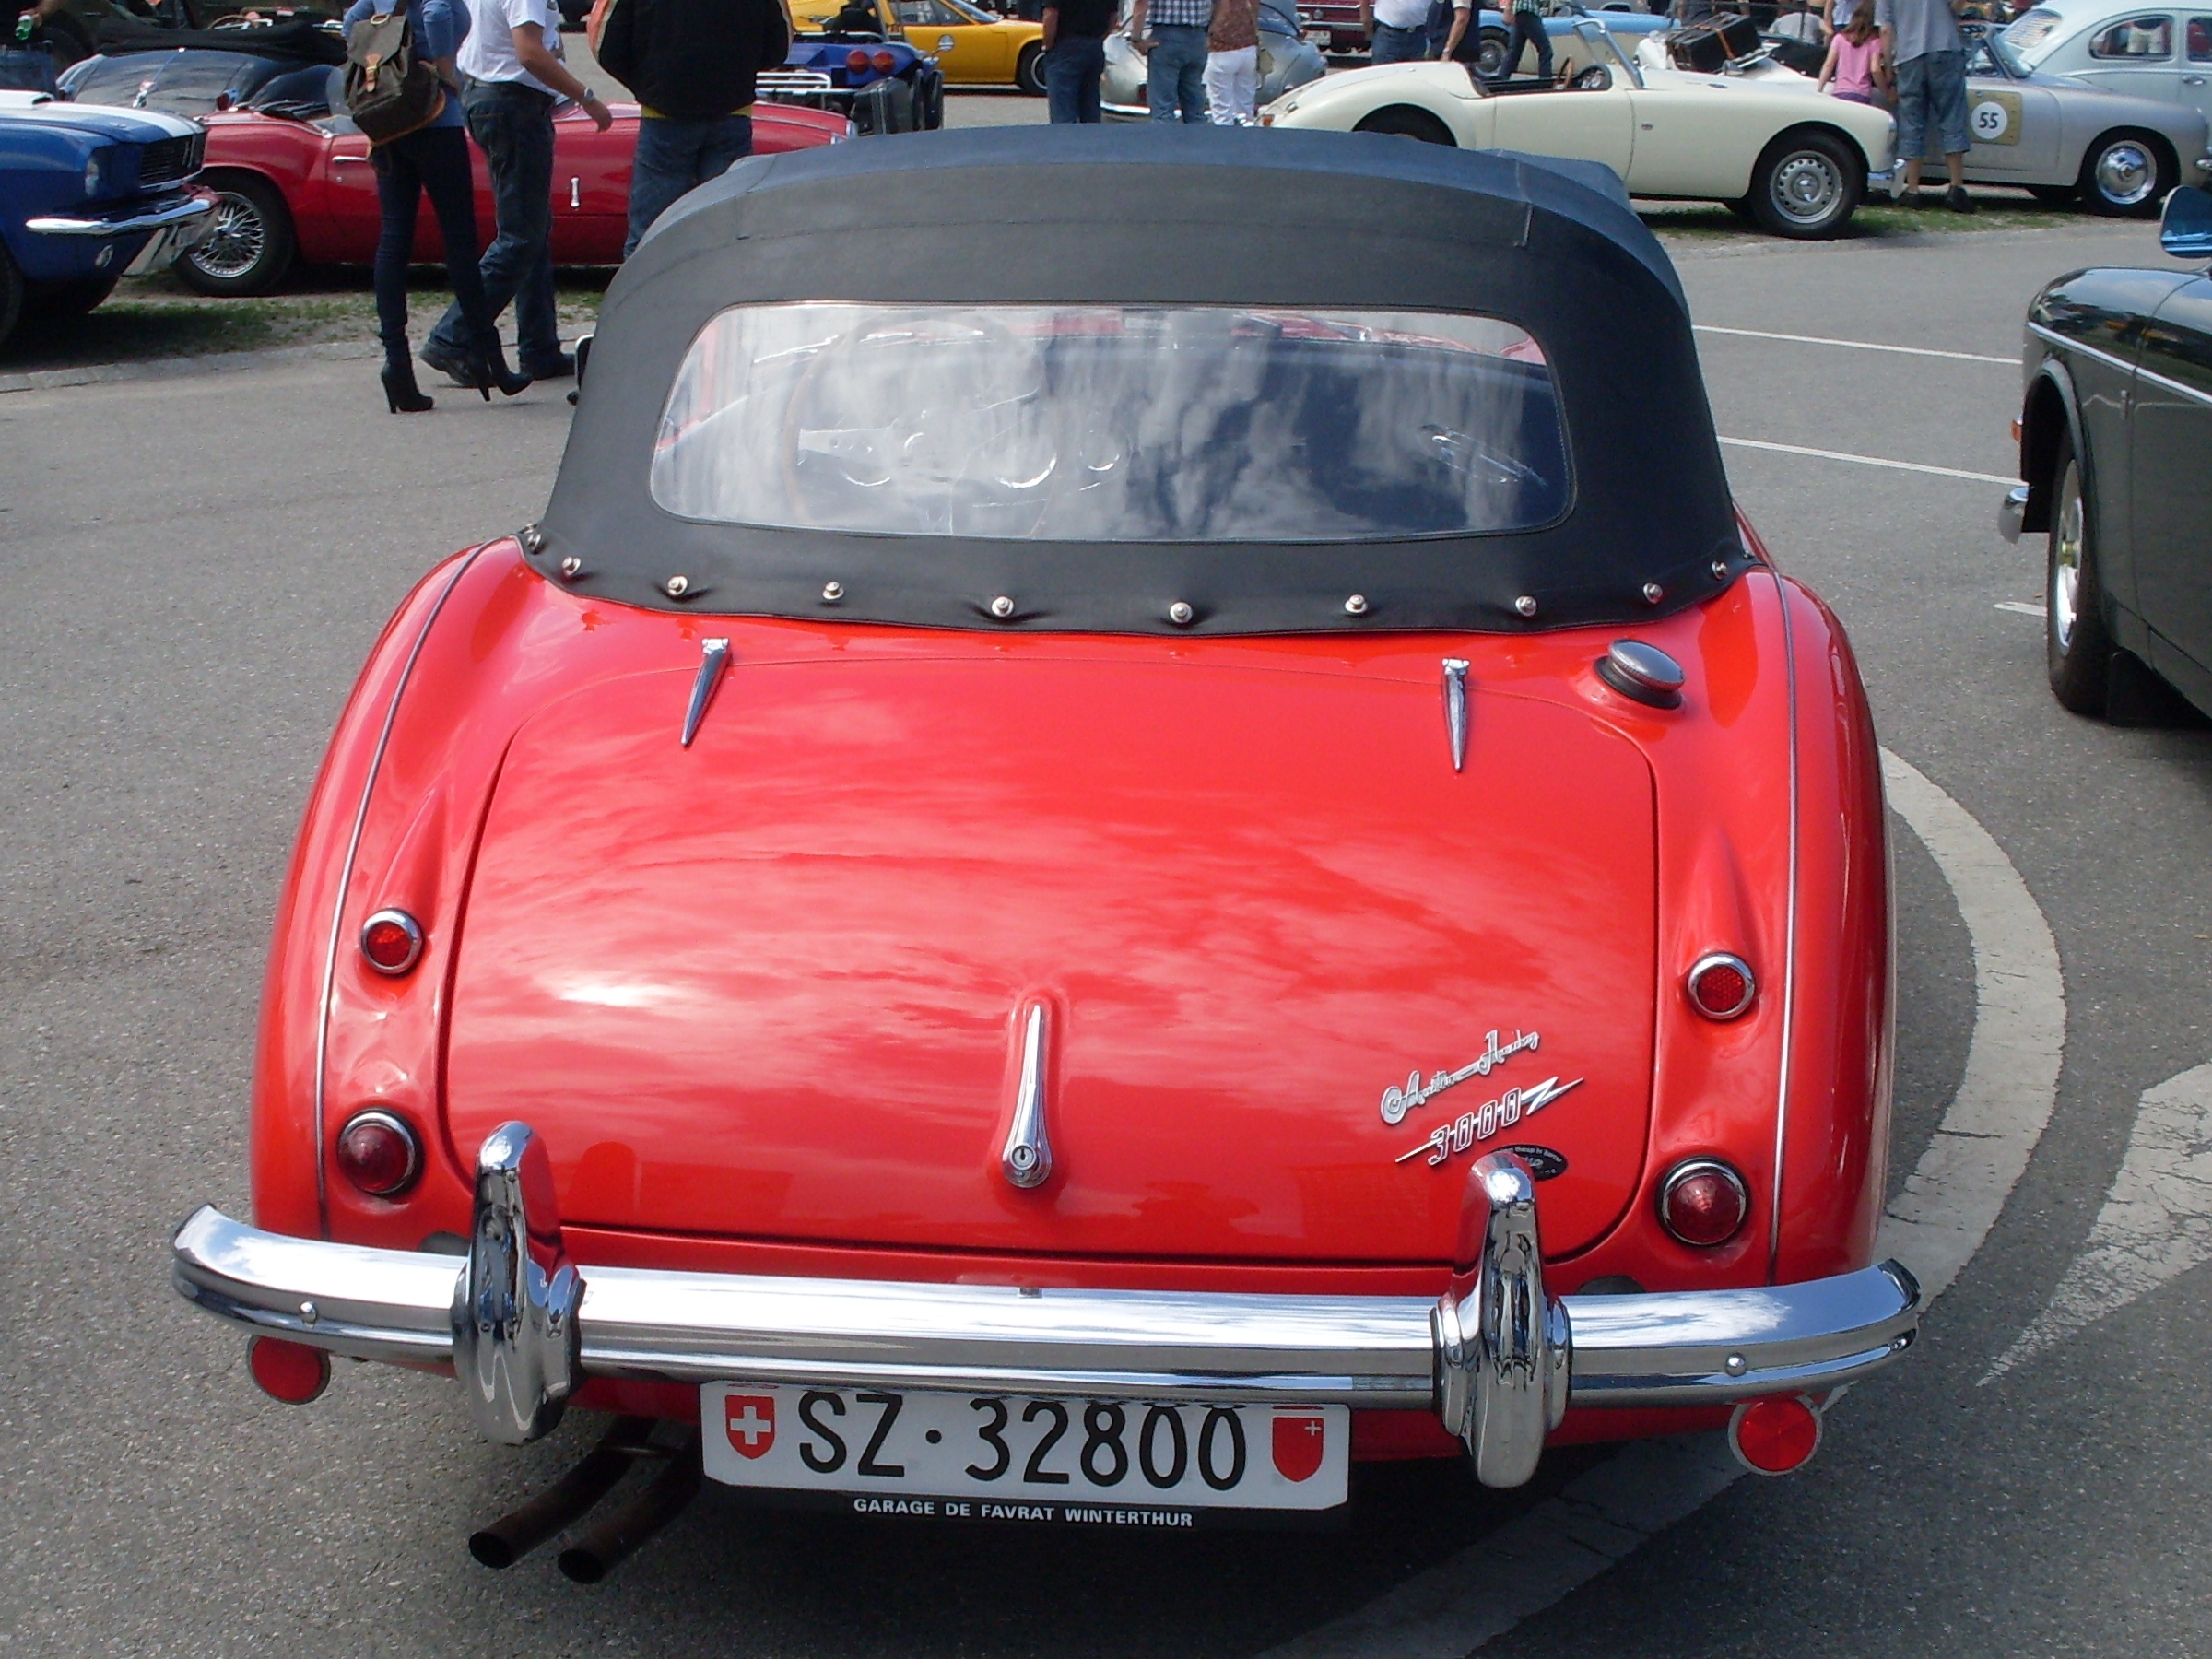 Austin-Healey 3000 Mk I 1959-1961, rear view